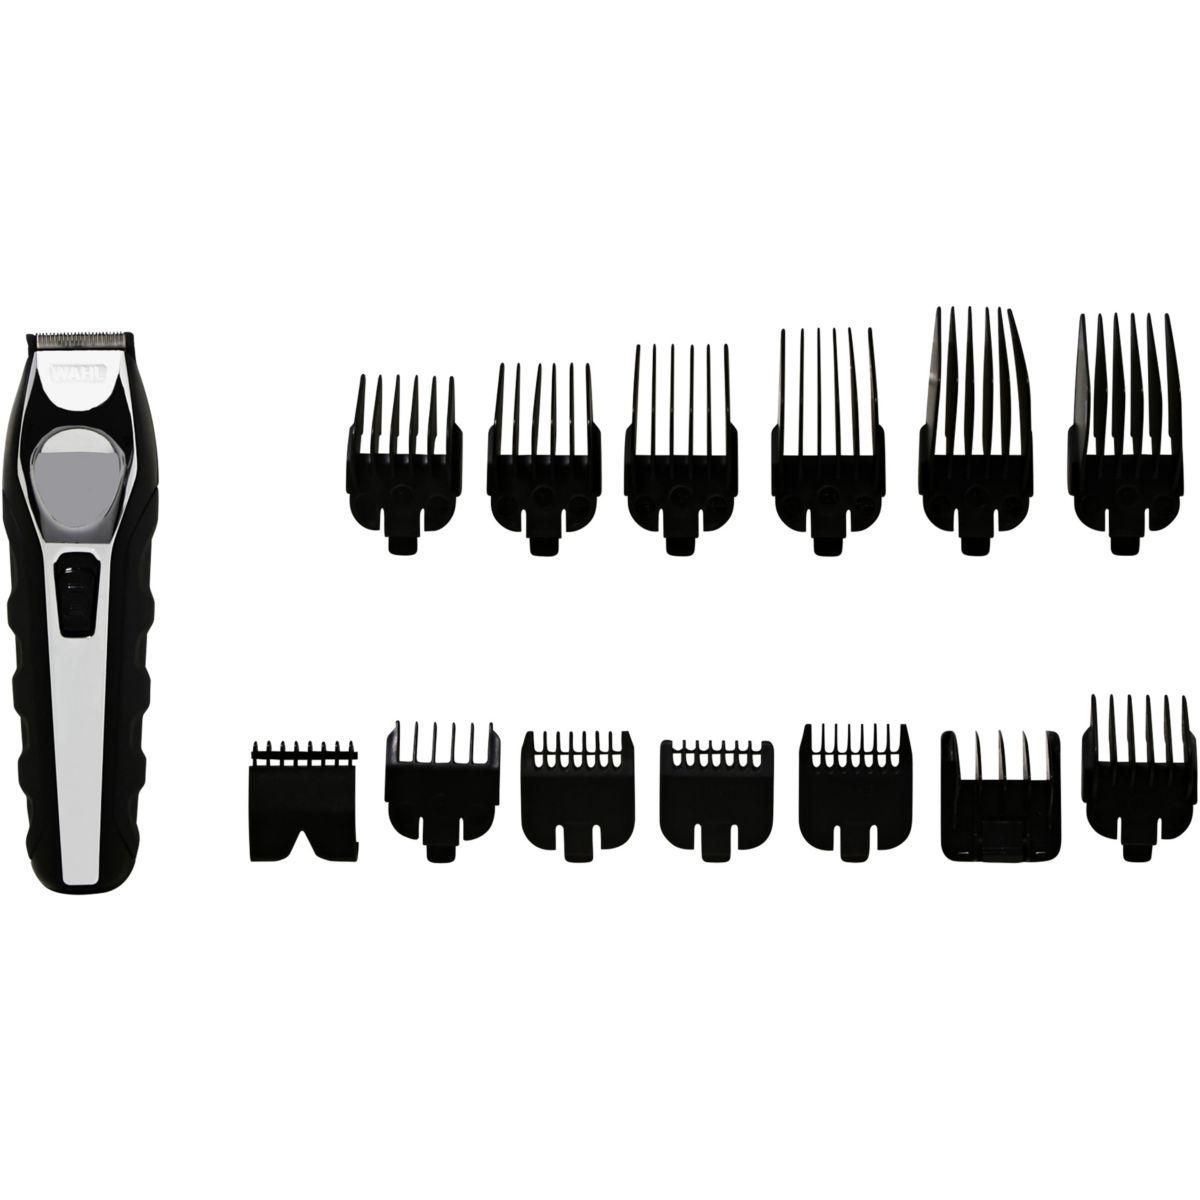 WAHL Tondeuse cheveux Total Beard grooming kit